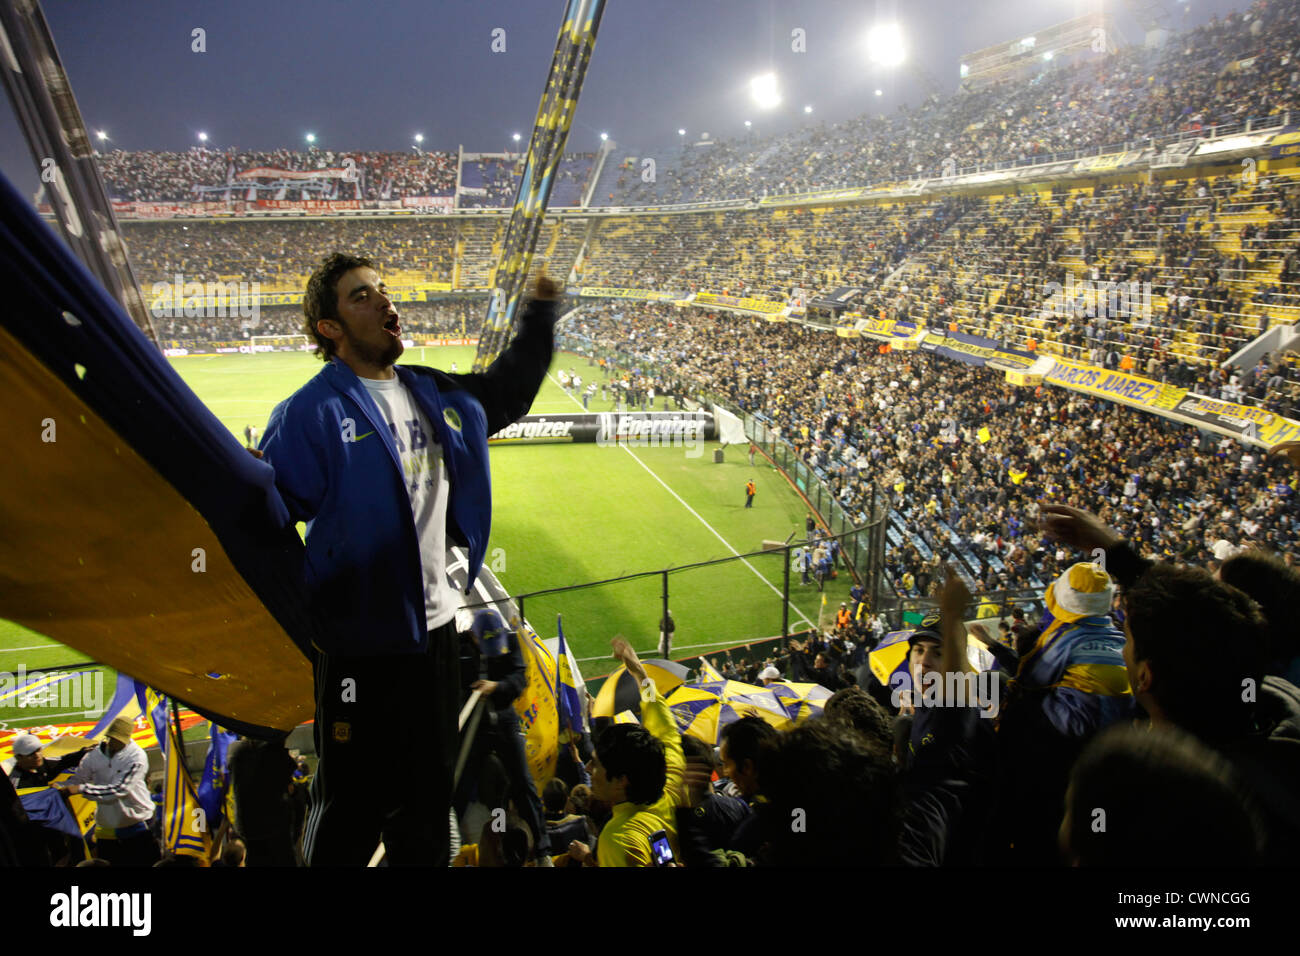 Fussballspiel Der Boca Juniors Im Stadium Bombonera La Boca Buenos Aires Argentinien Stockfotografie Alamy